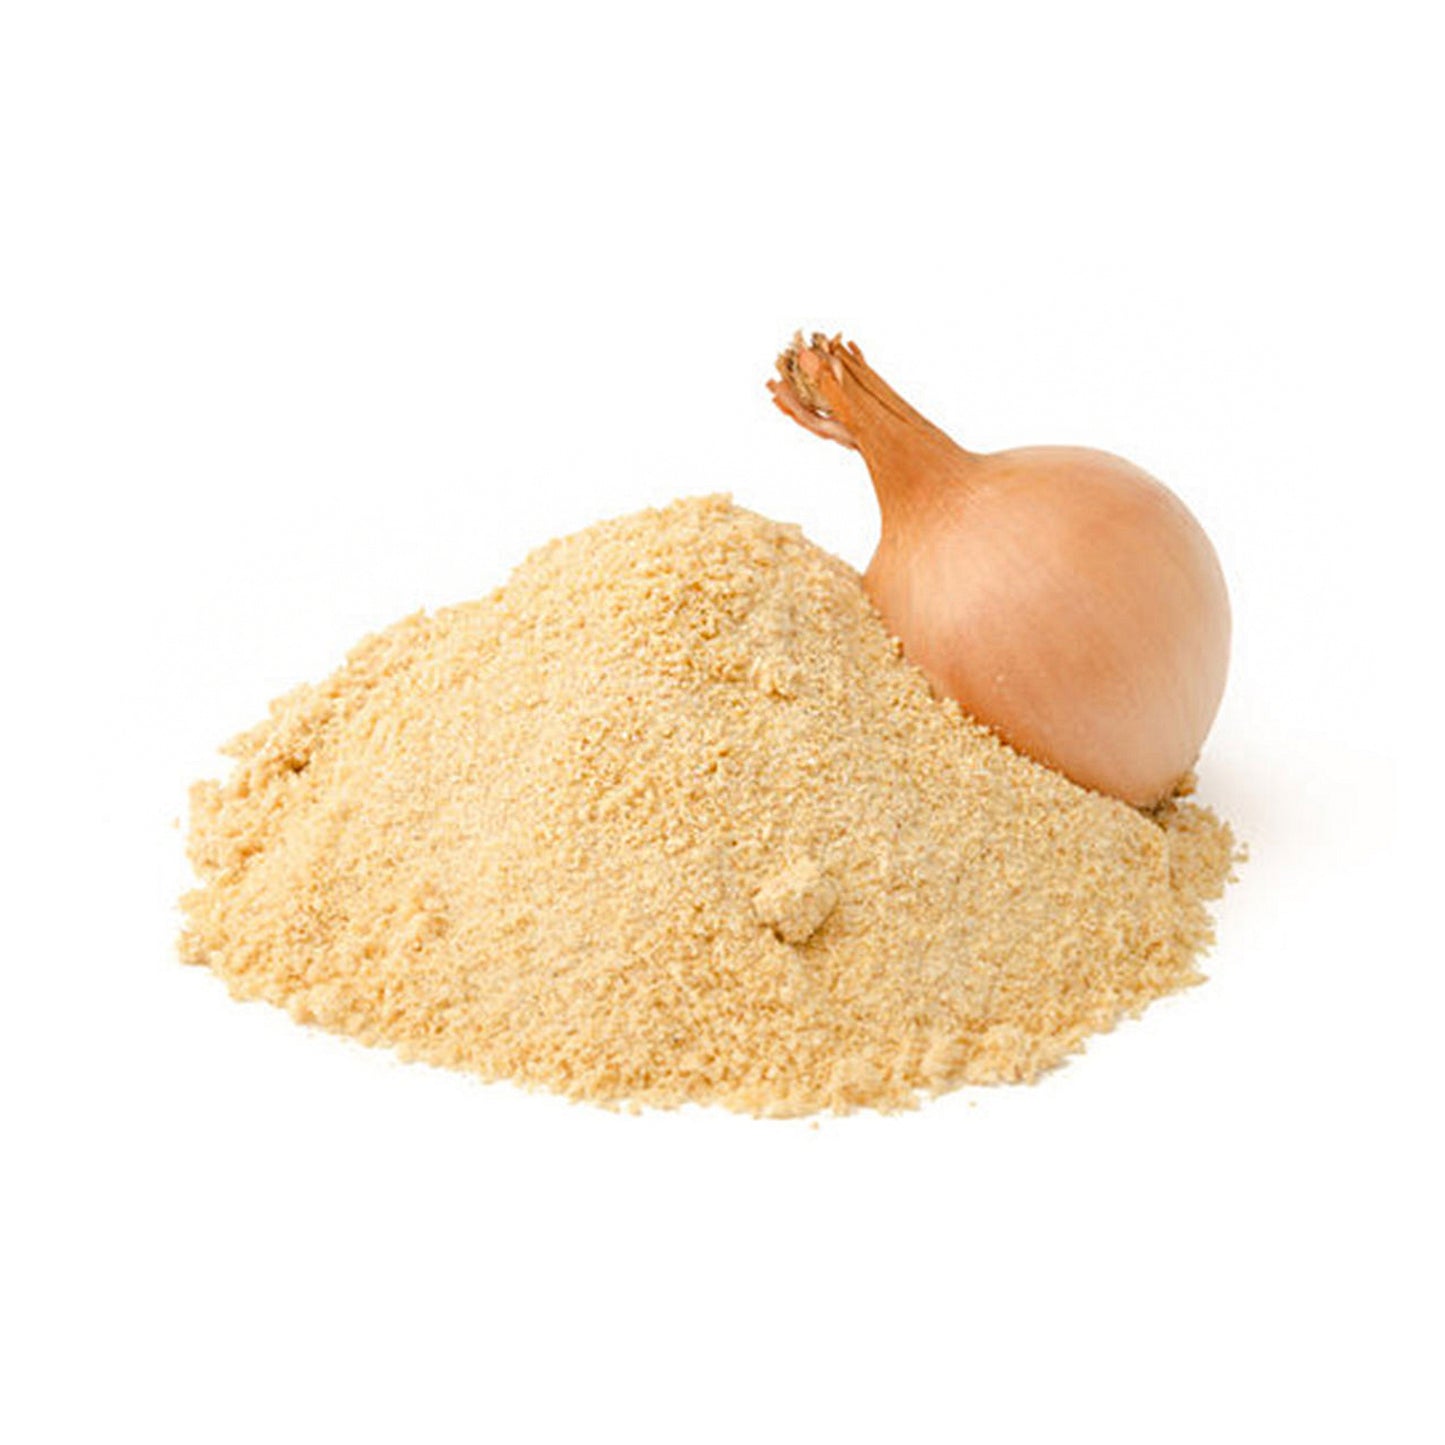 Organic Onion Powder | 0.19 lb - Flavorful and aromatic seasoning